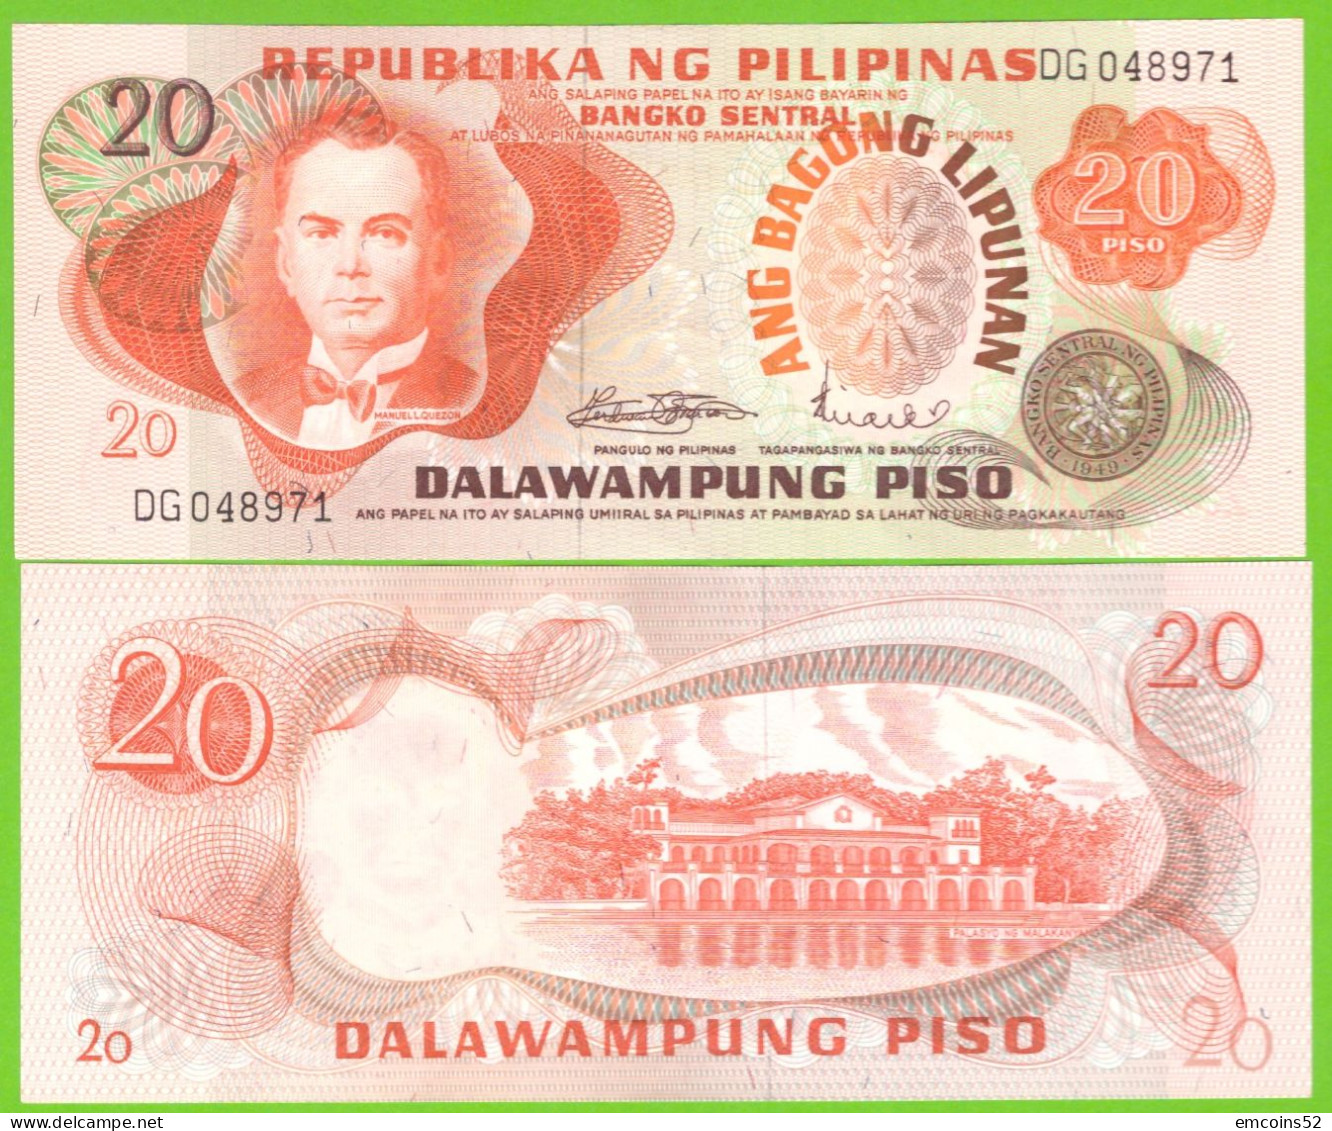 PHILIPPINES 20 PISO ND 1970  P-155 UNC - Philippines